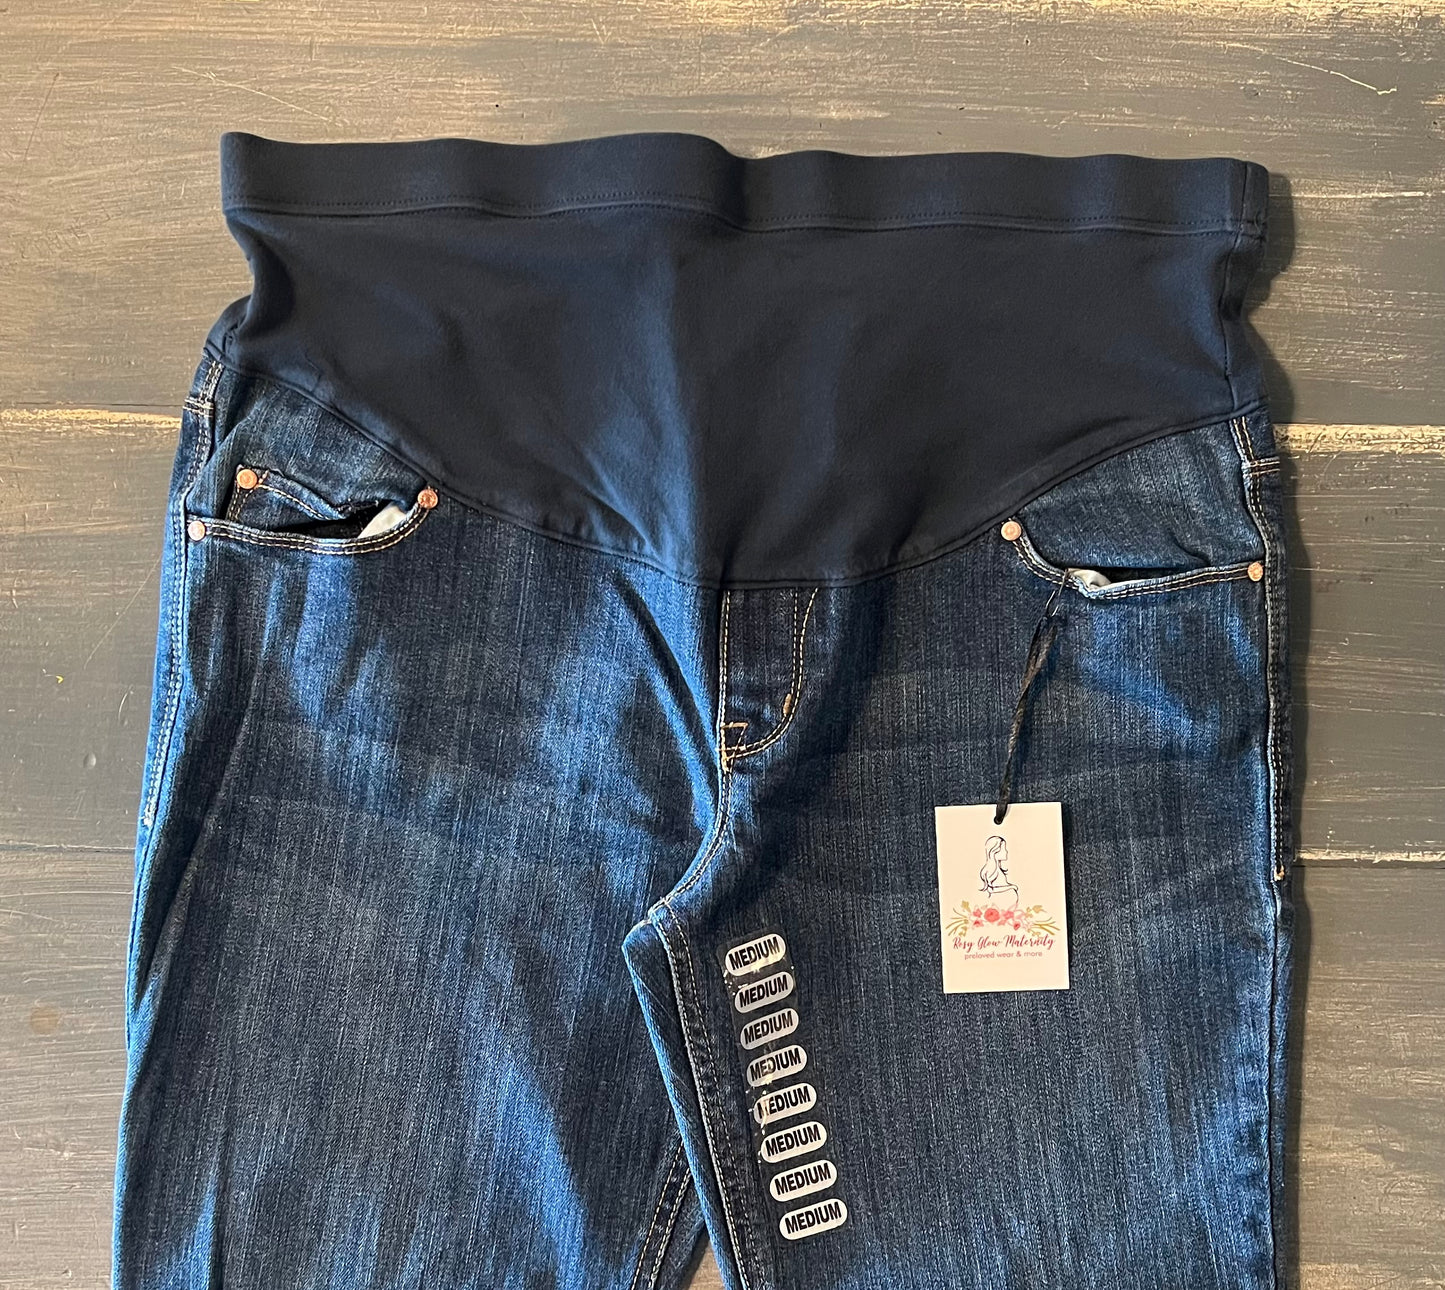 Full panel 30" flare jeans, Medium wash